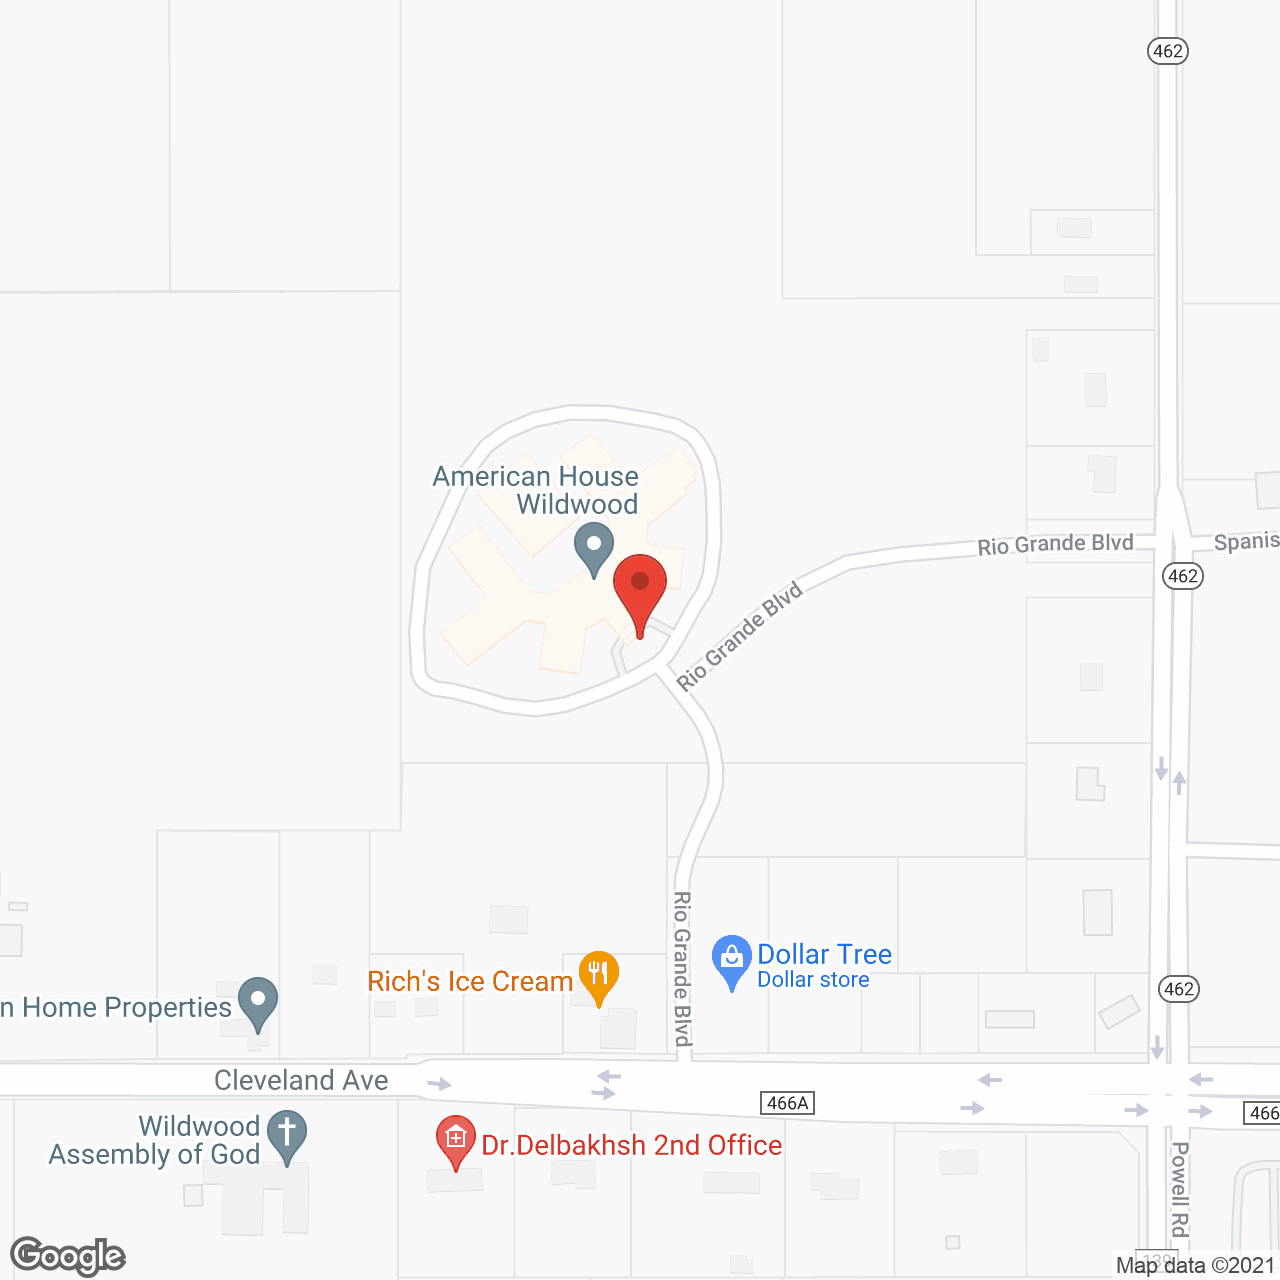 American House Wildwood in google map